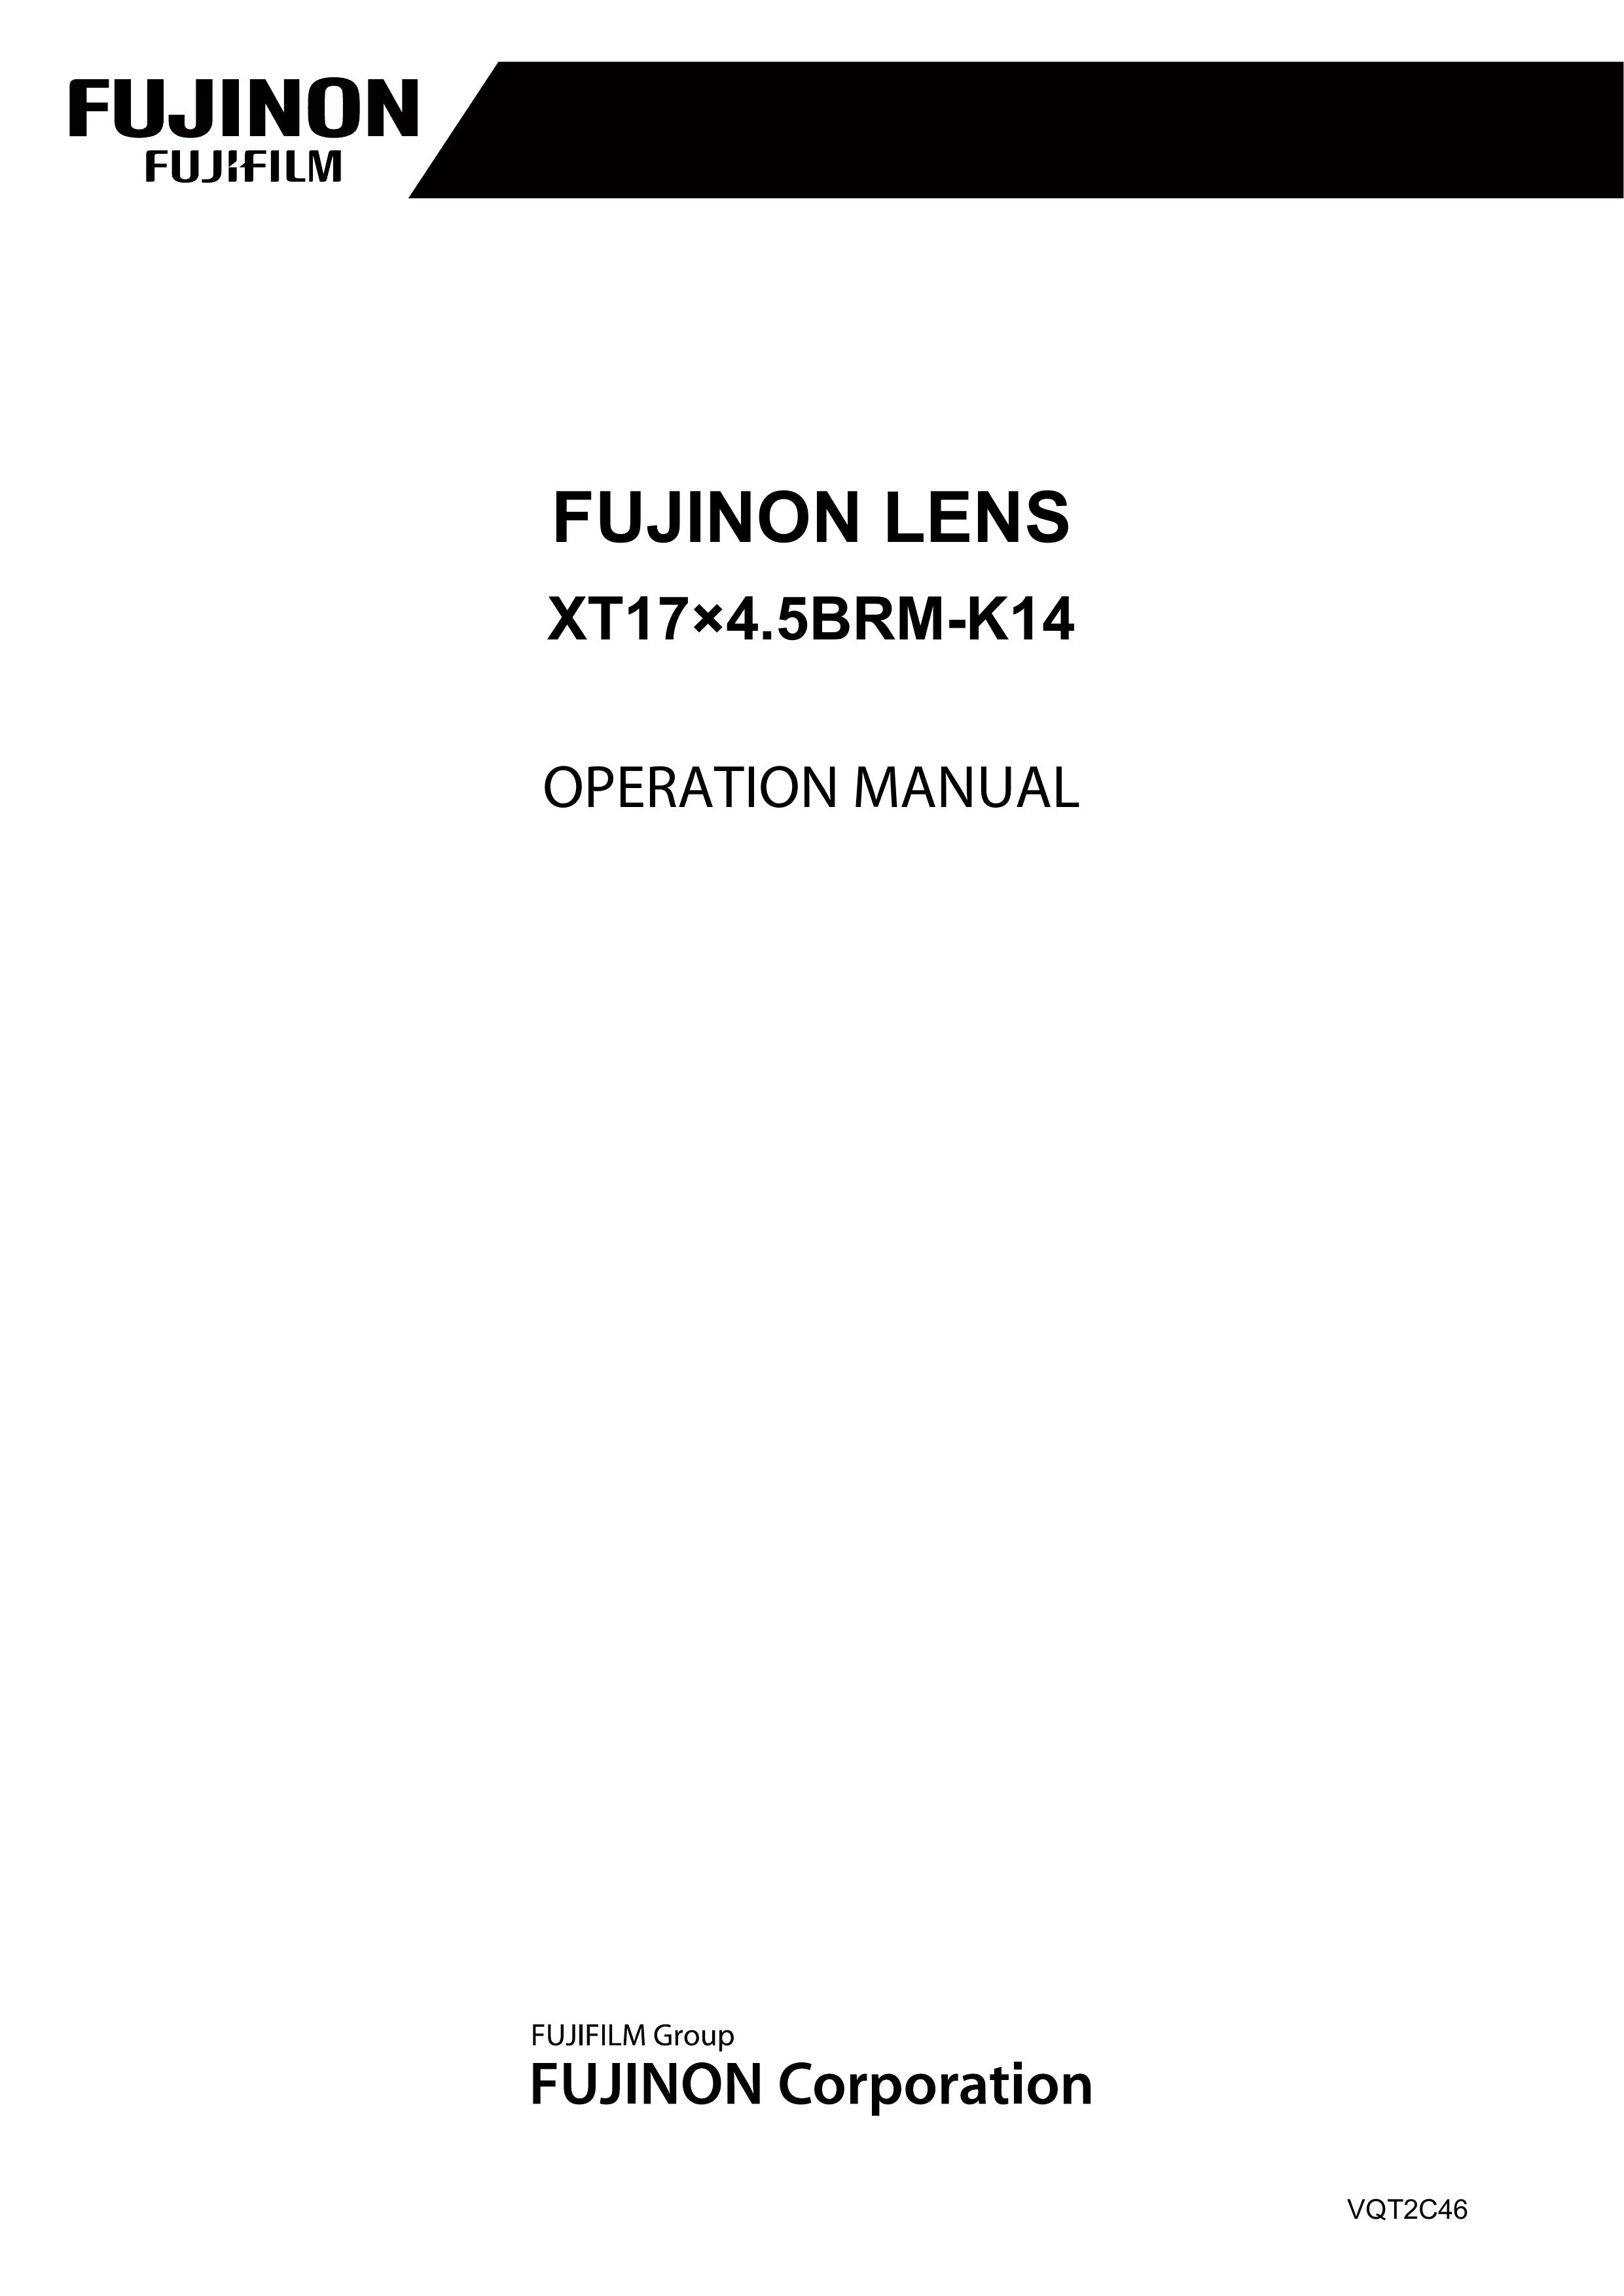 FujiFilm XT174.5BRM-K14 Camera Lens User Manual